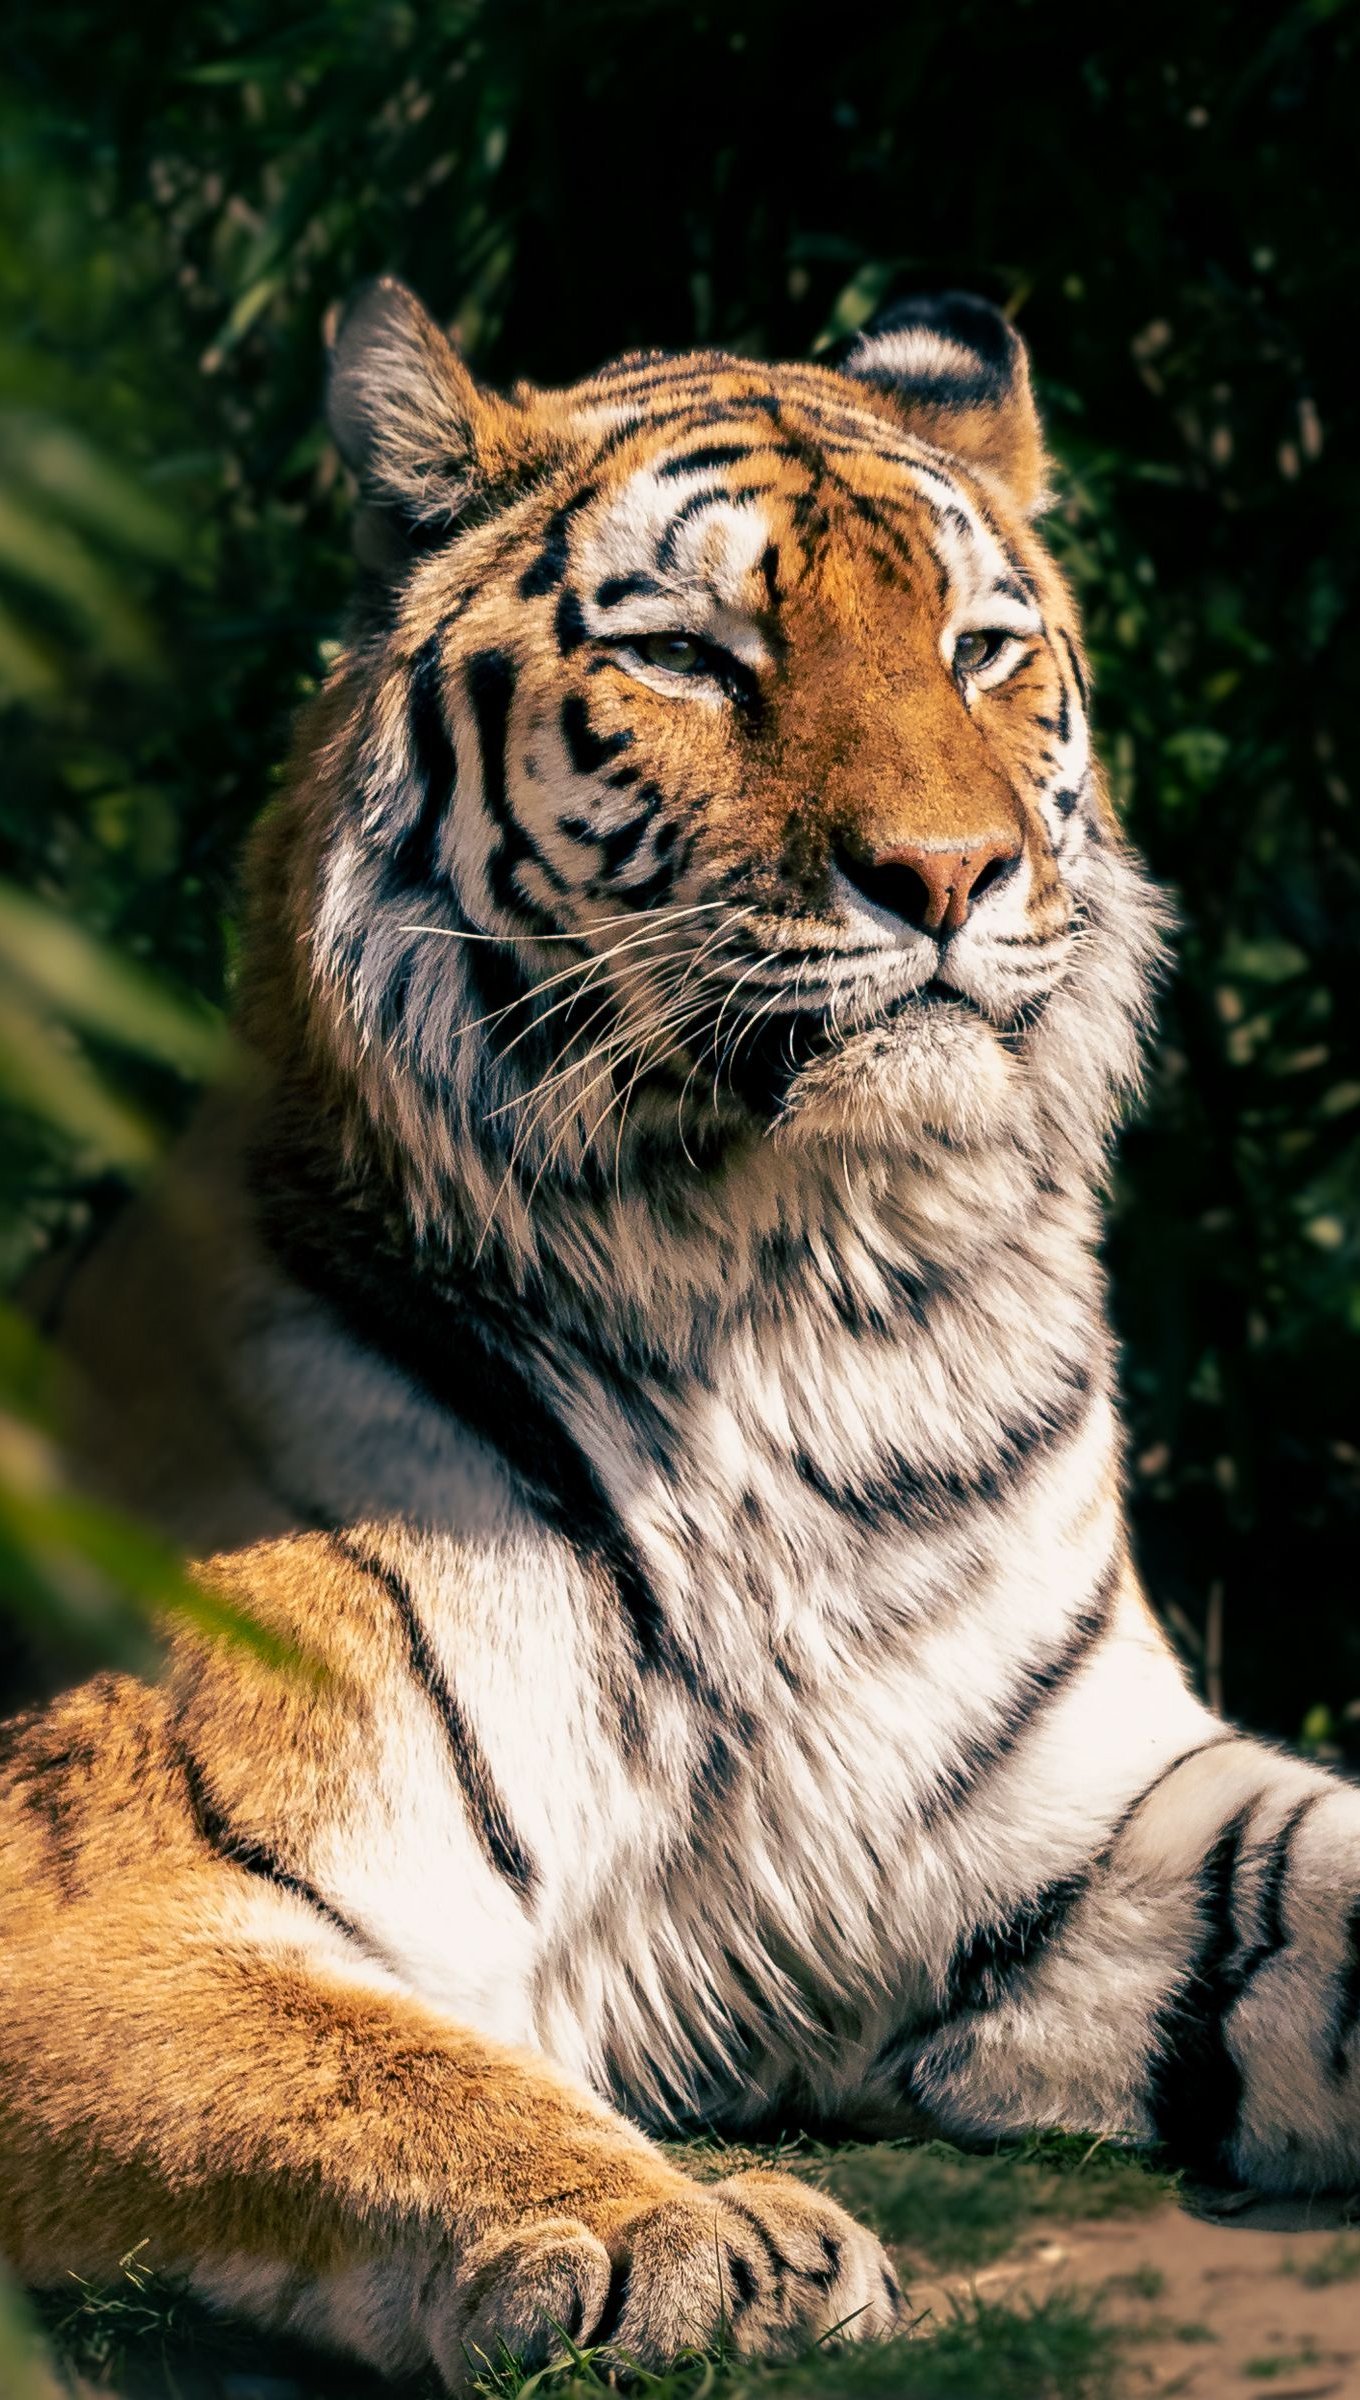 Tiger taking in the sun Wallpaper 4k Ultra HD ID:9826